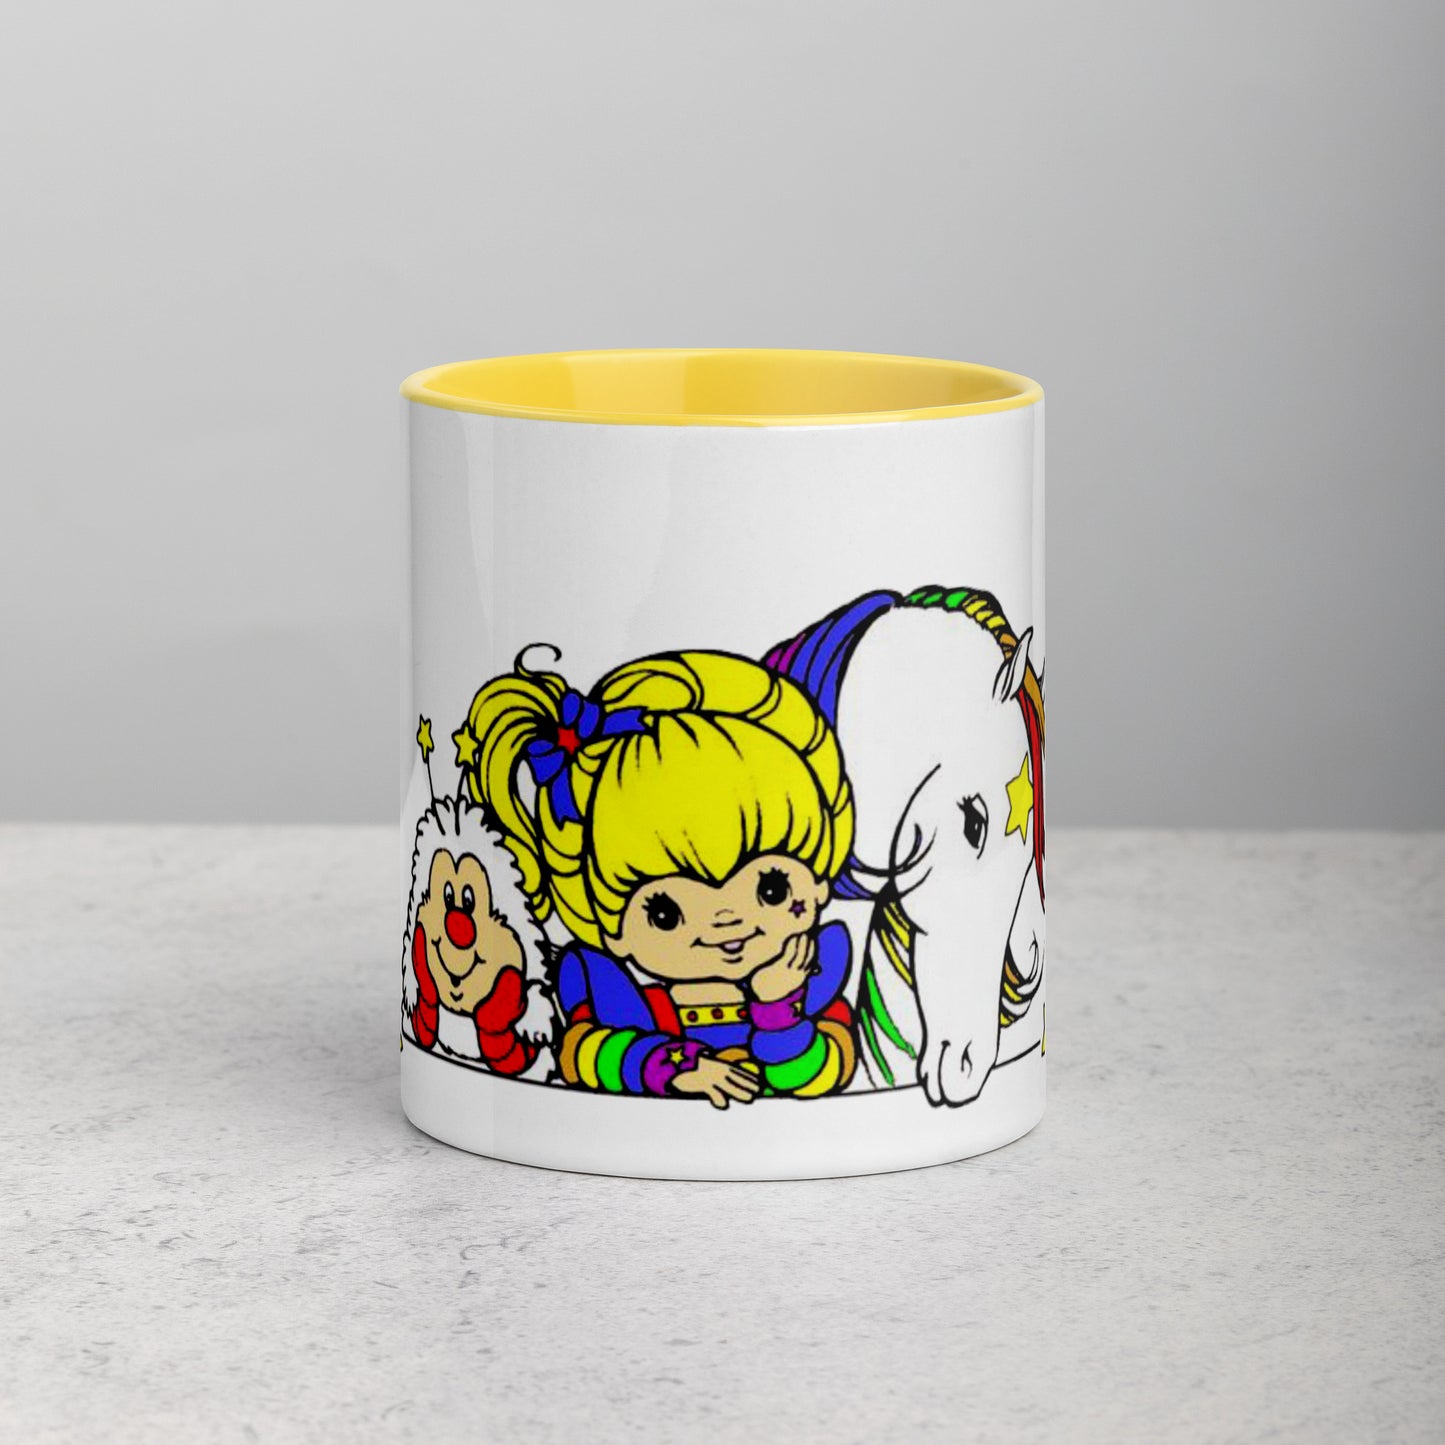 Rainbow Bright Ceramic Mug